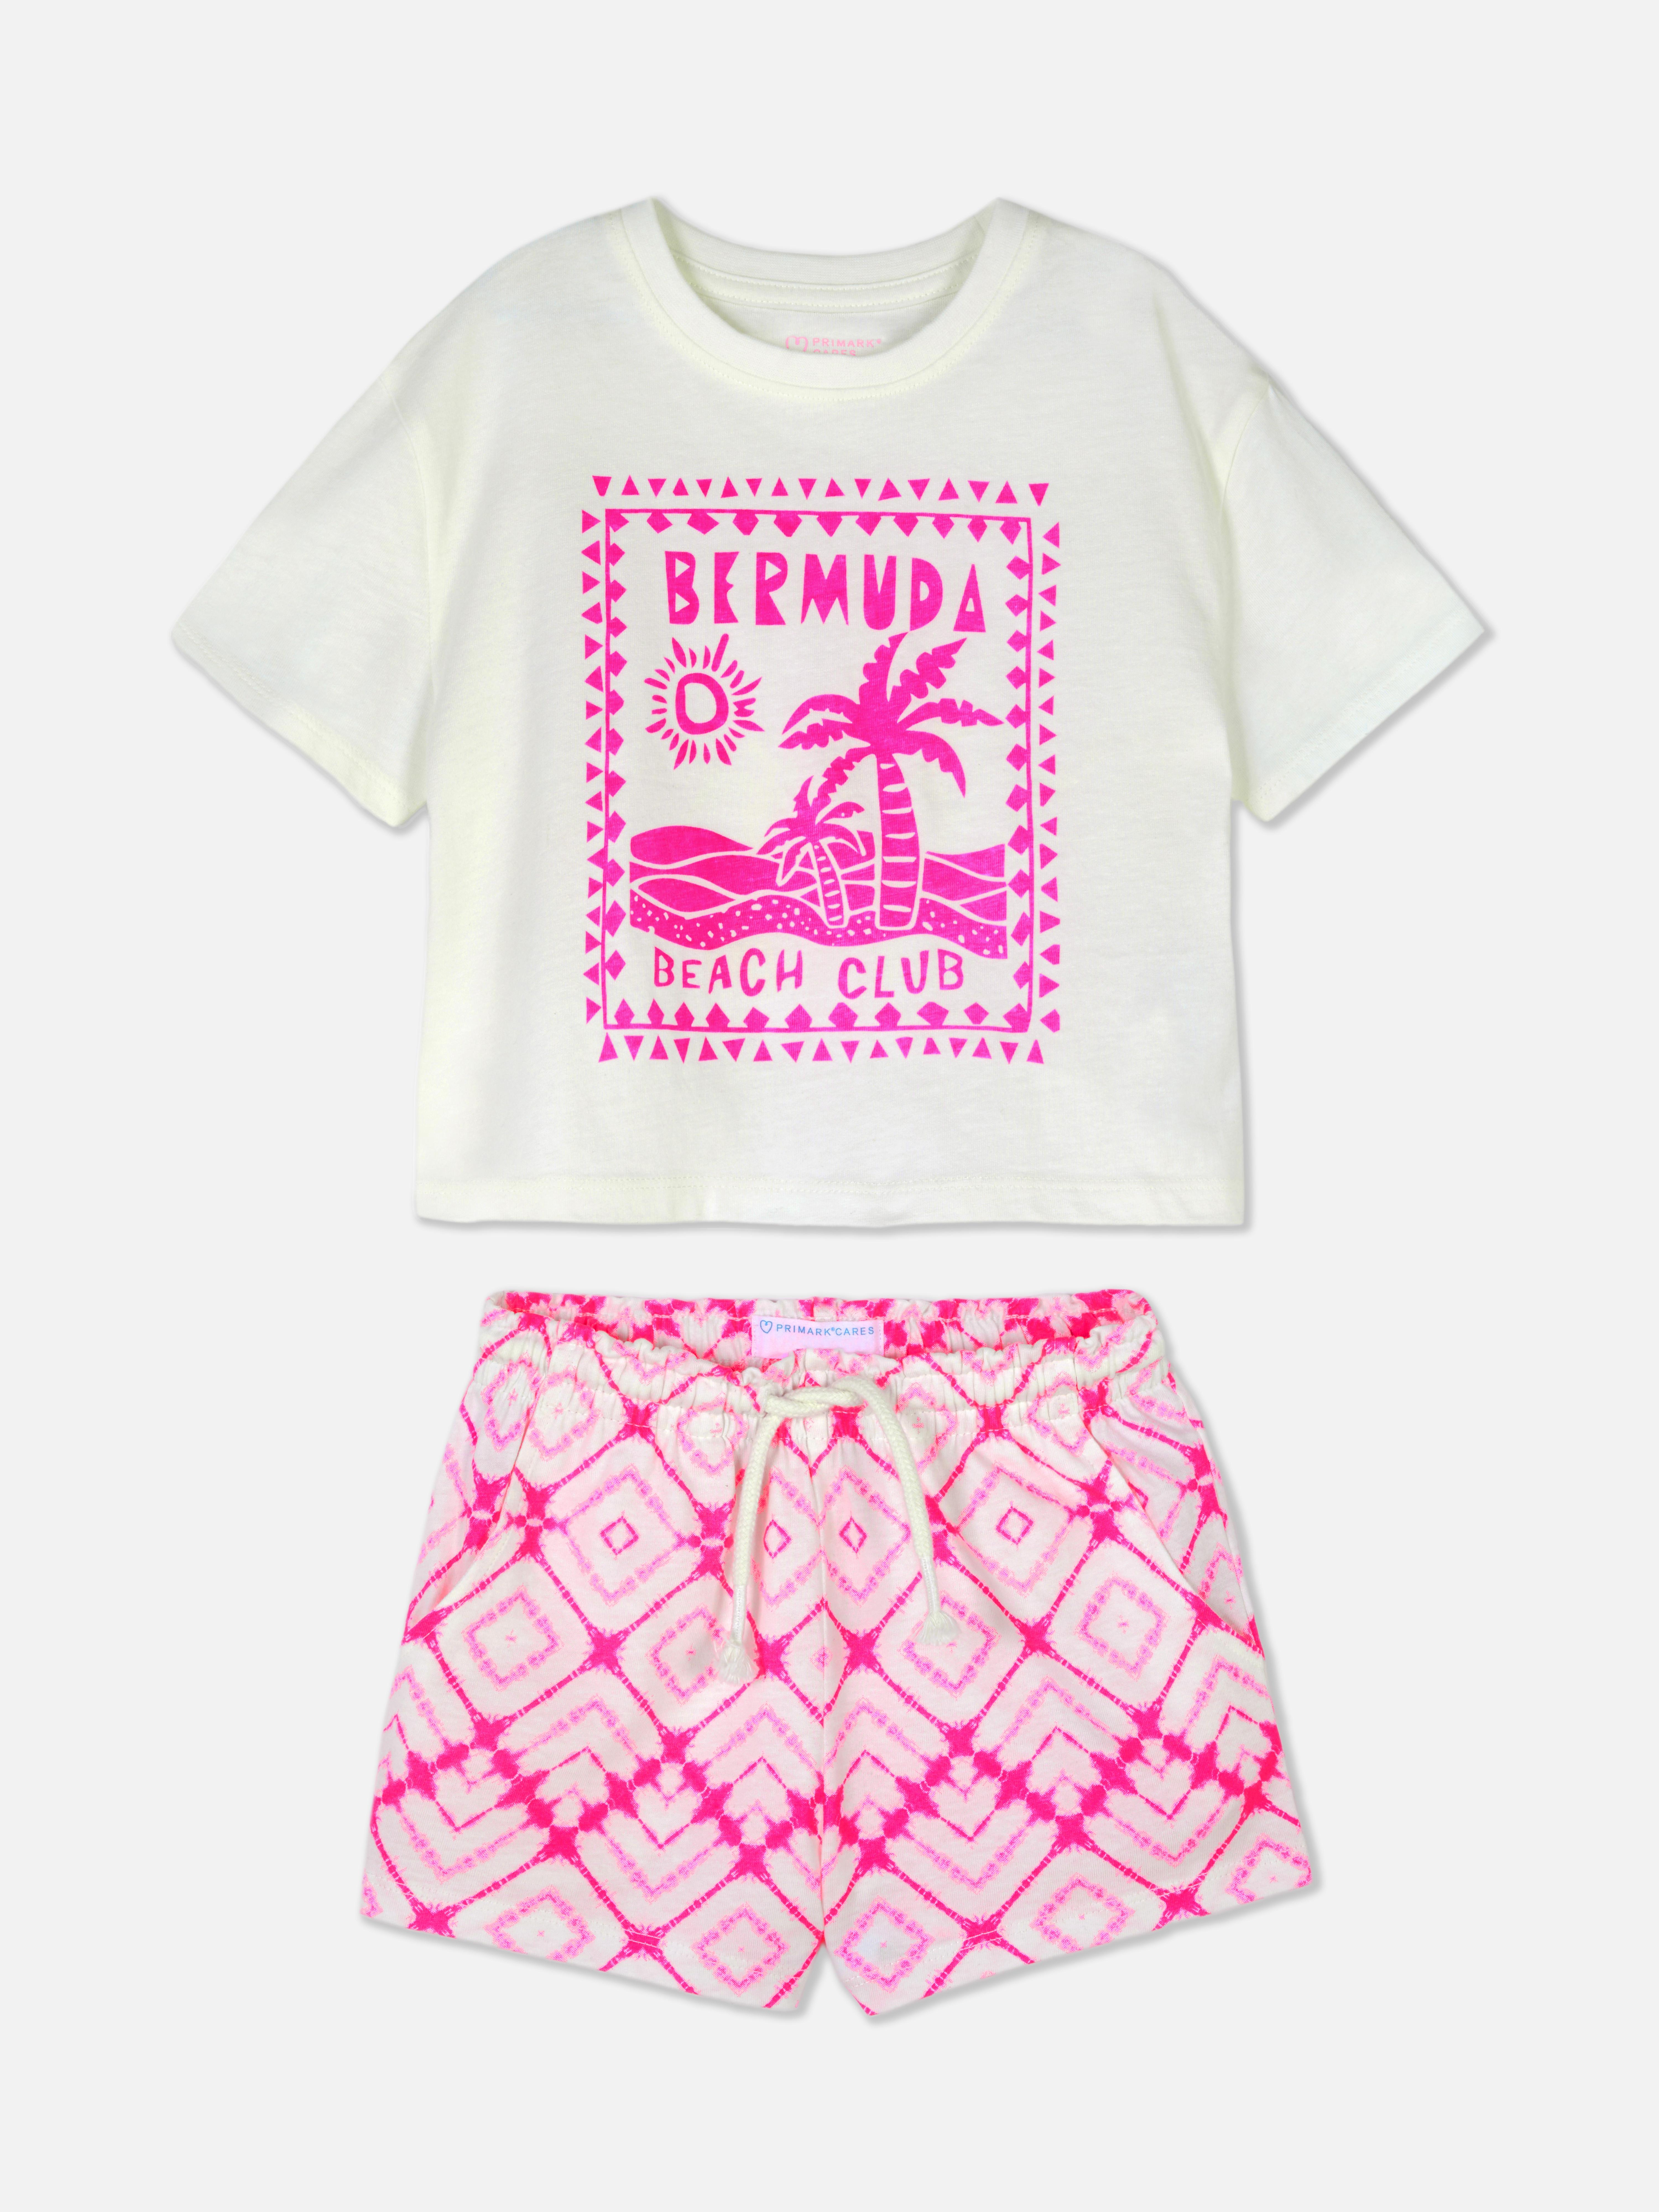 „Bermuda Beach Club“ T-Shirt und Shorts im Set